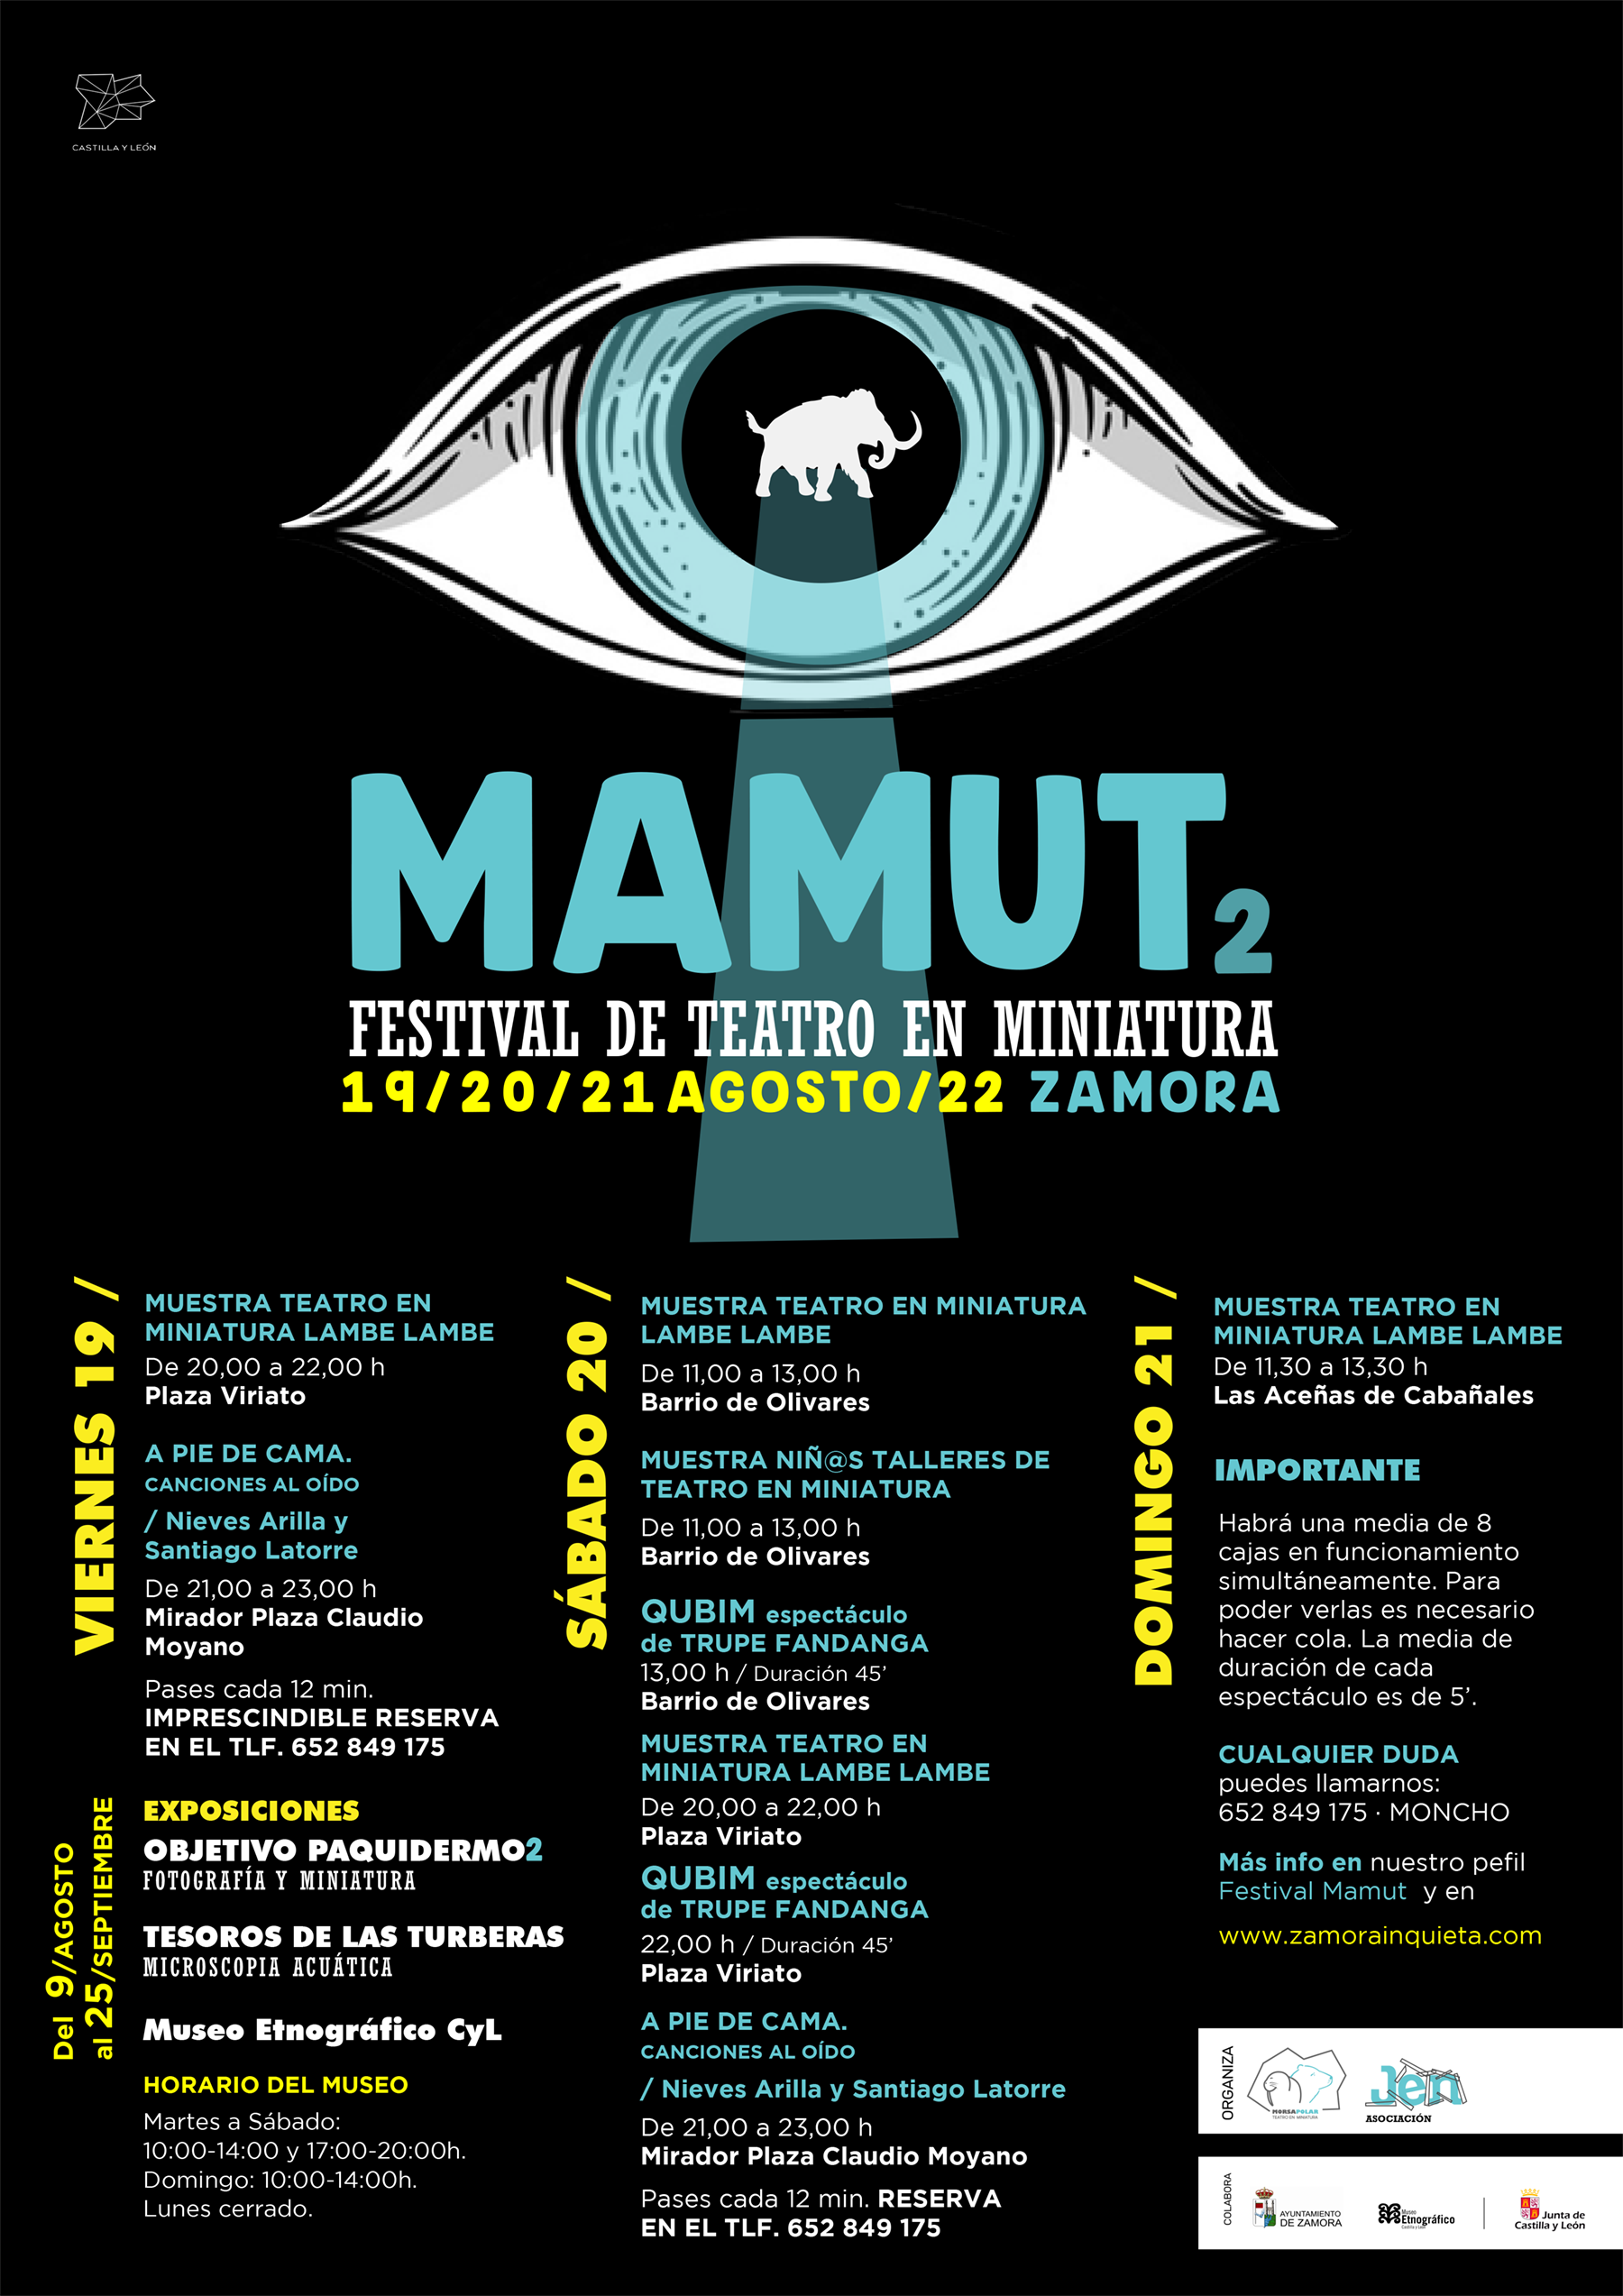 Mamut teatro en miniatura. Agenda cultural. Zamora Inquieta.